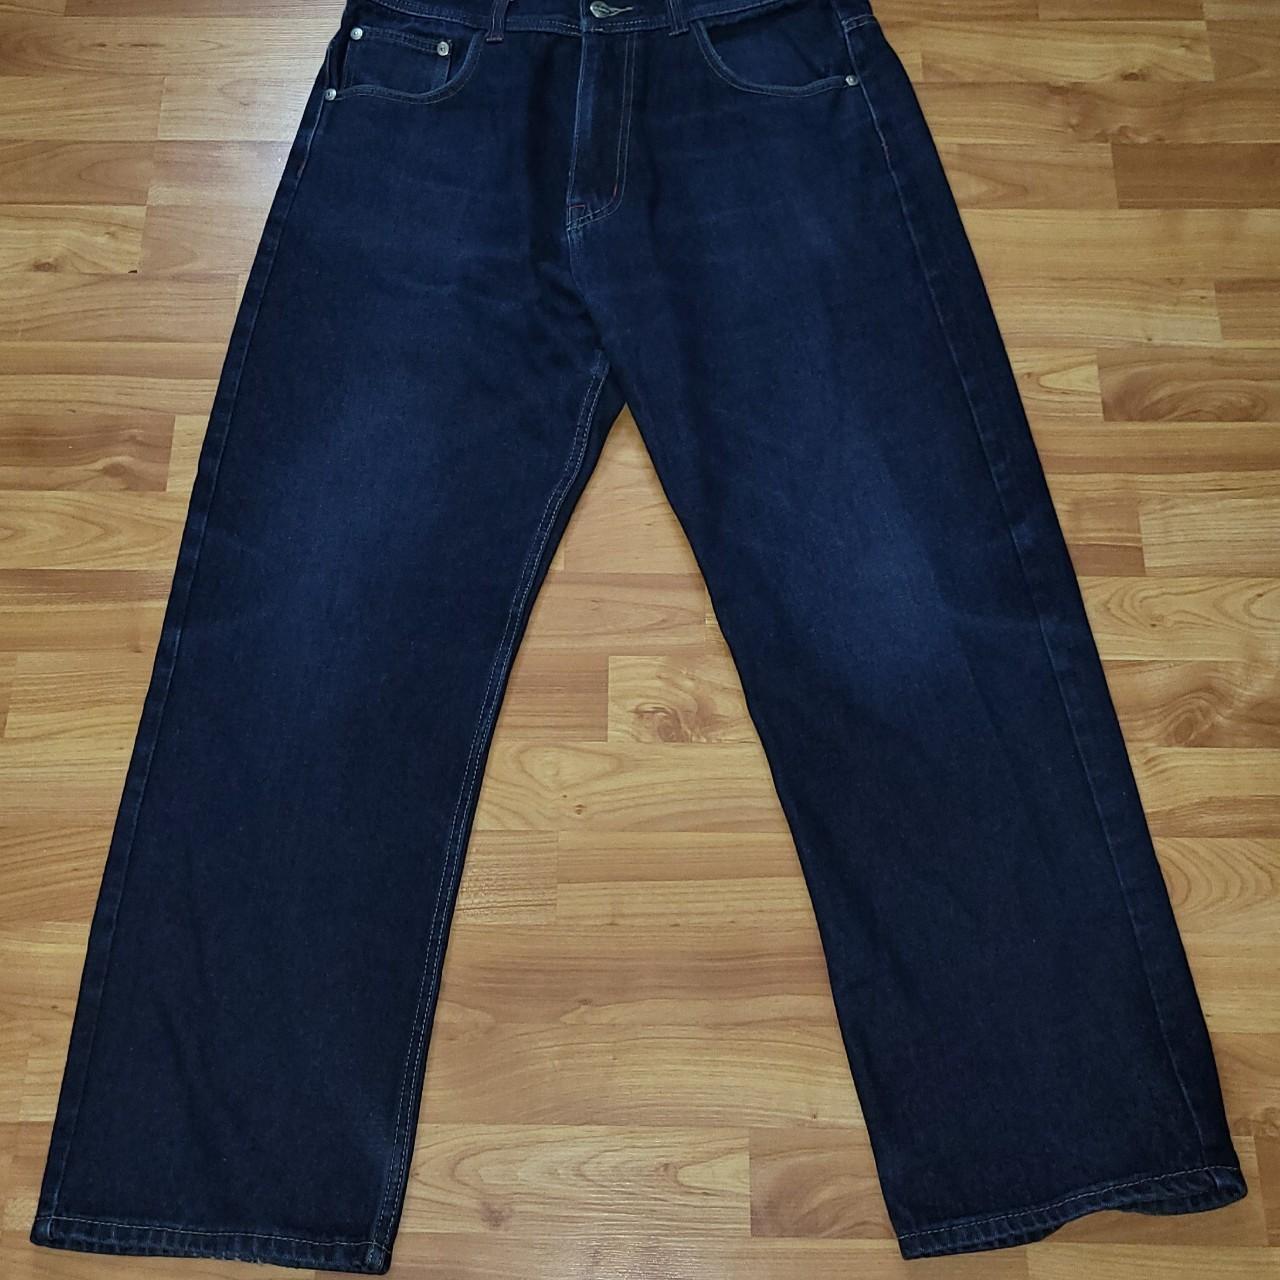 Vintage Akademiks Jeans size 38/32. In good... - Depop